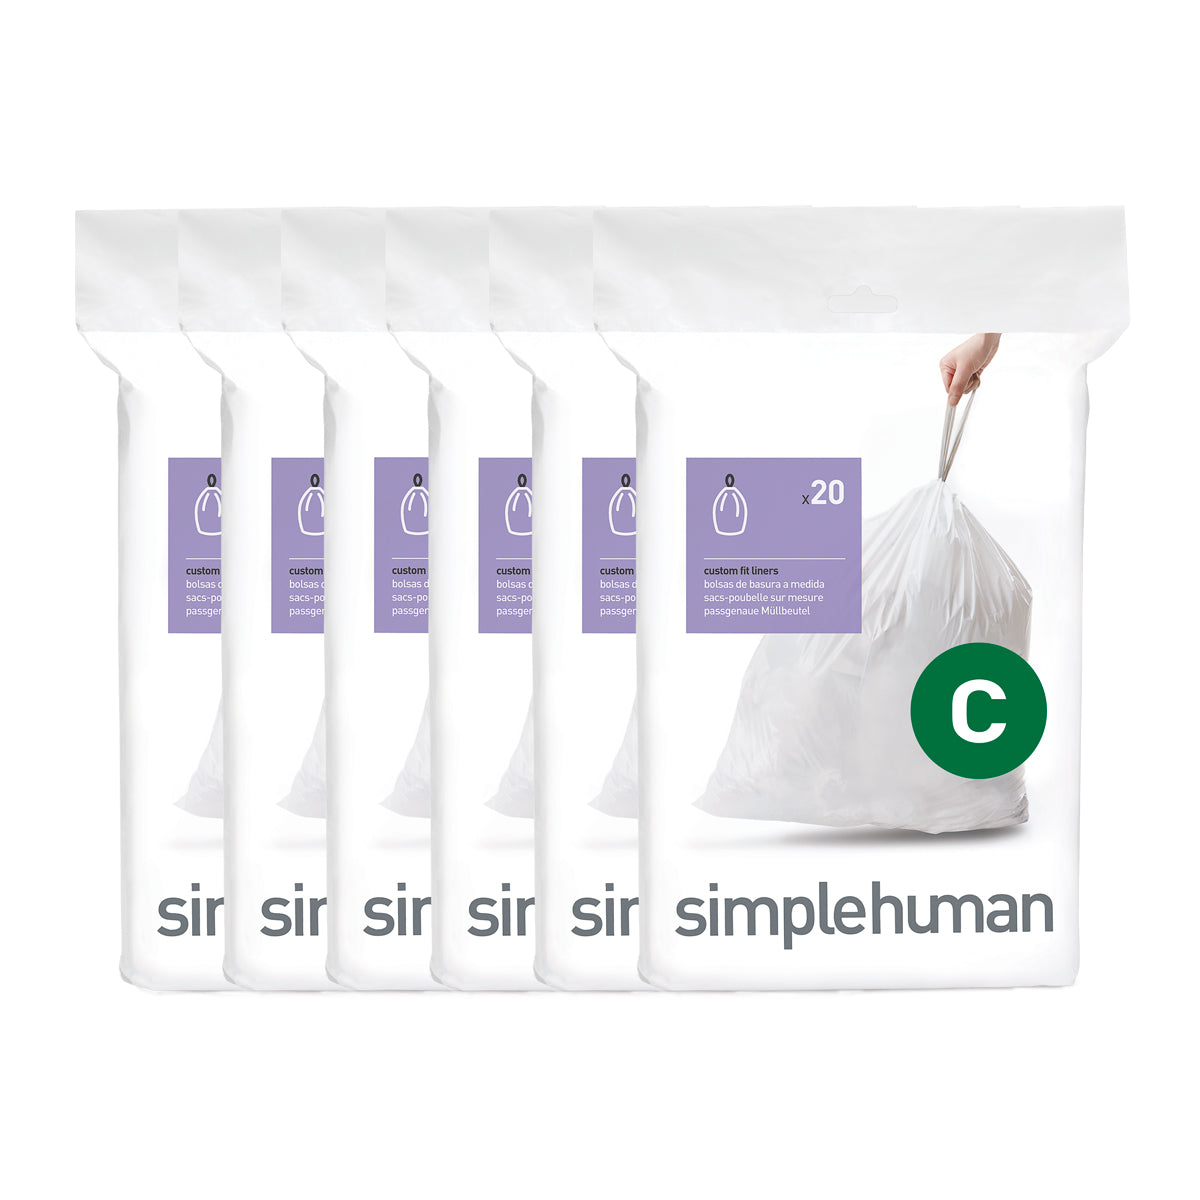 Simplehuman Custom Fit Trash Can Liner (3 Options)